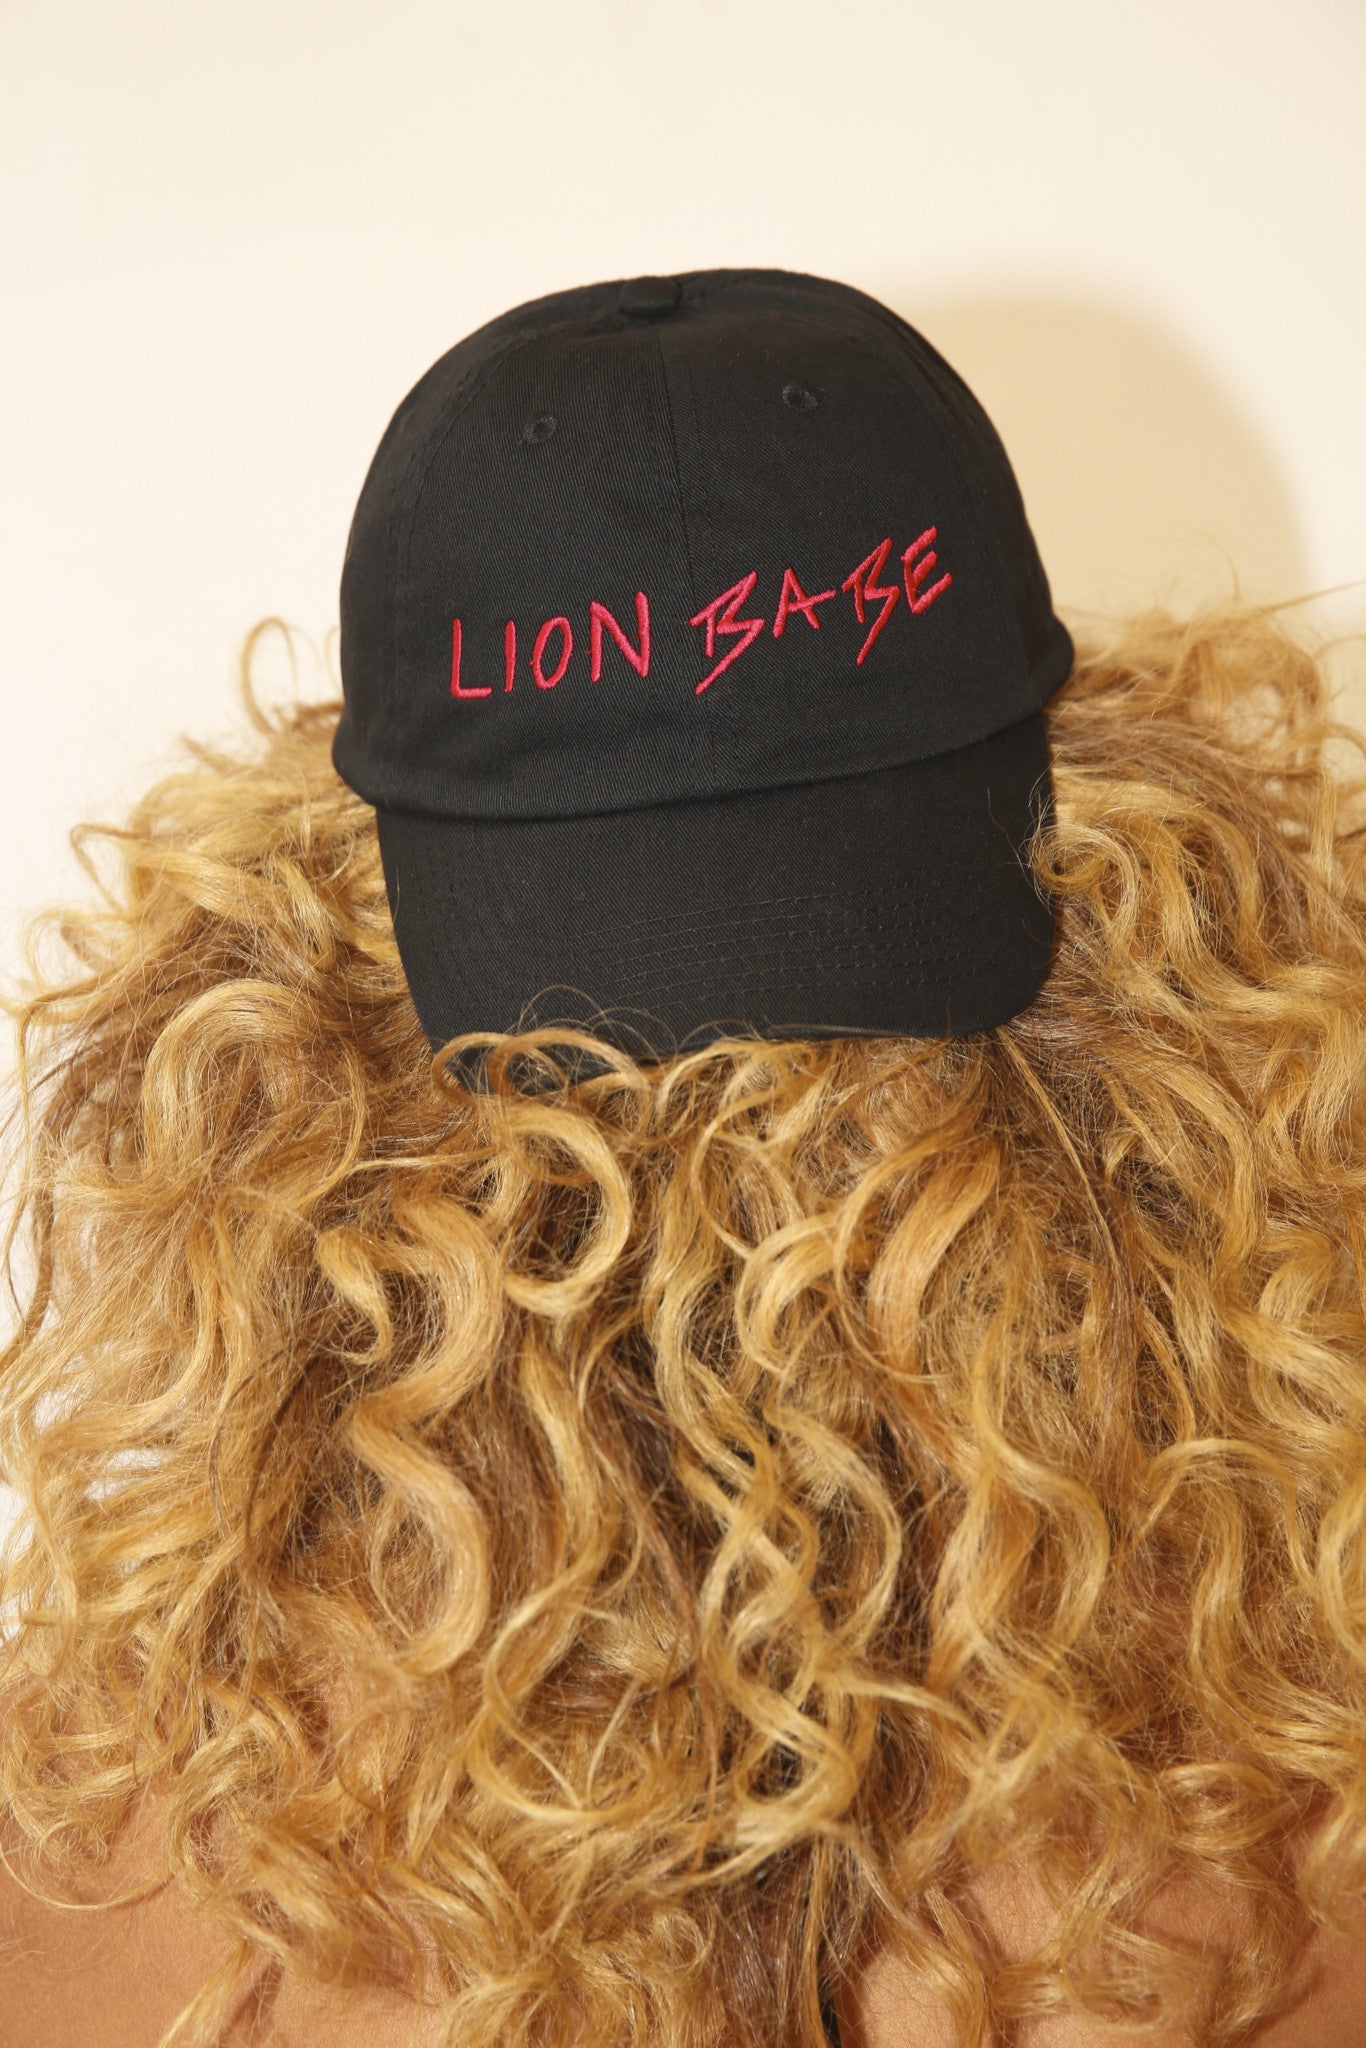 LION BABE BASEBALL HAT